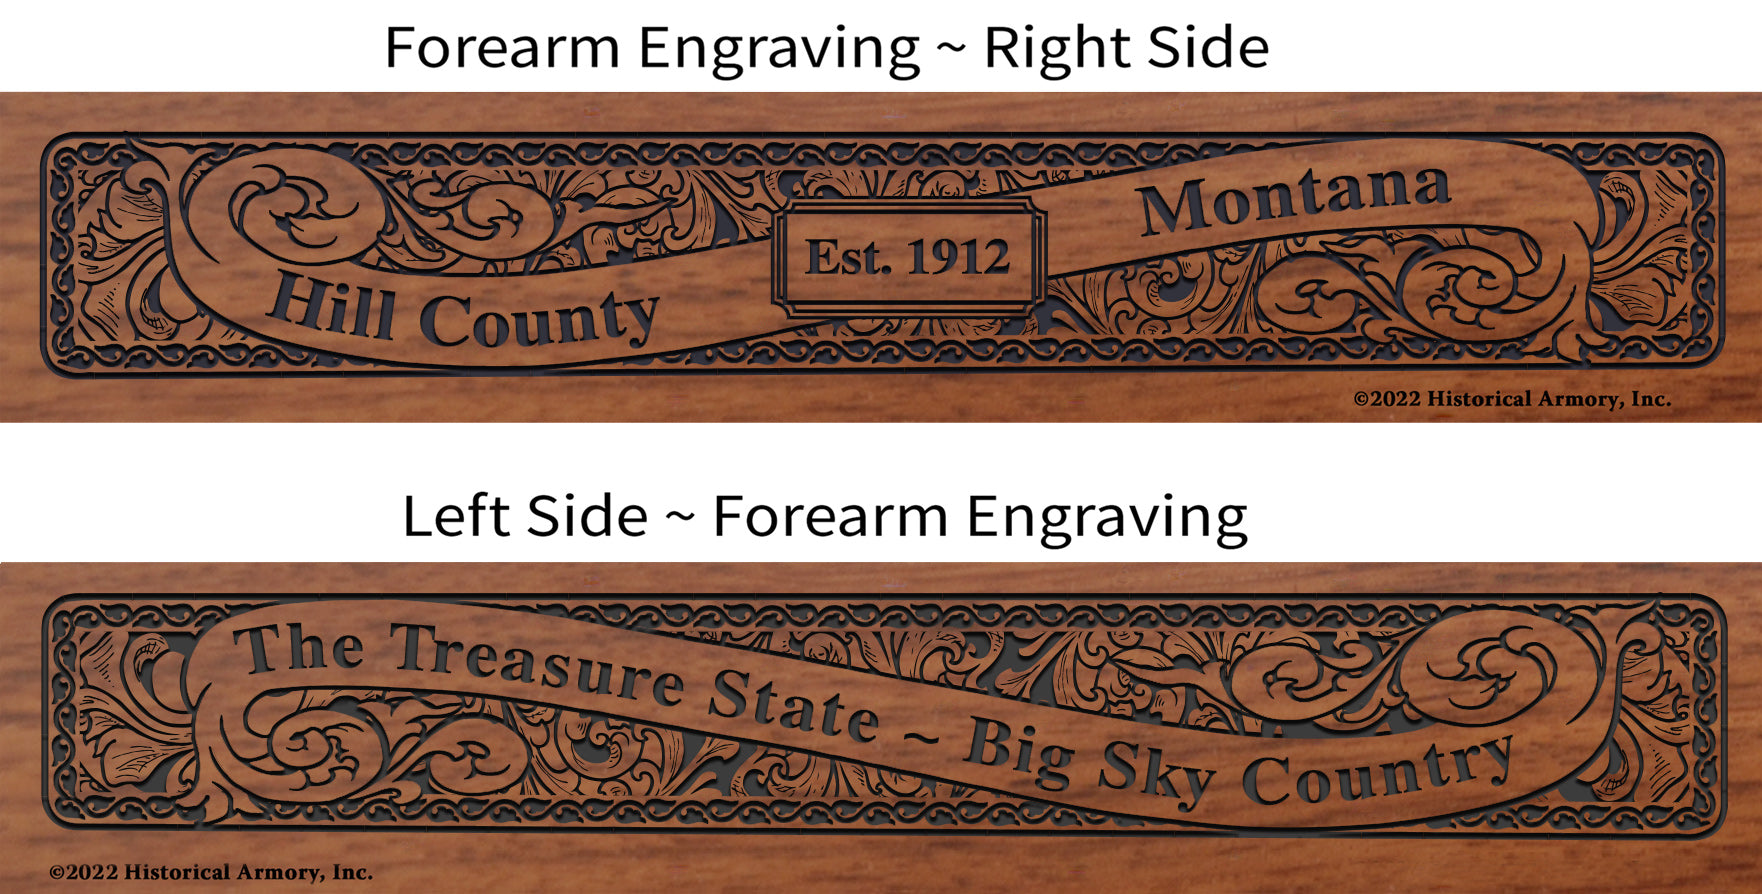 Hill County Montana Engraved Rifle Forearm